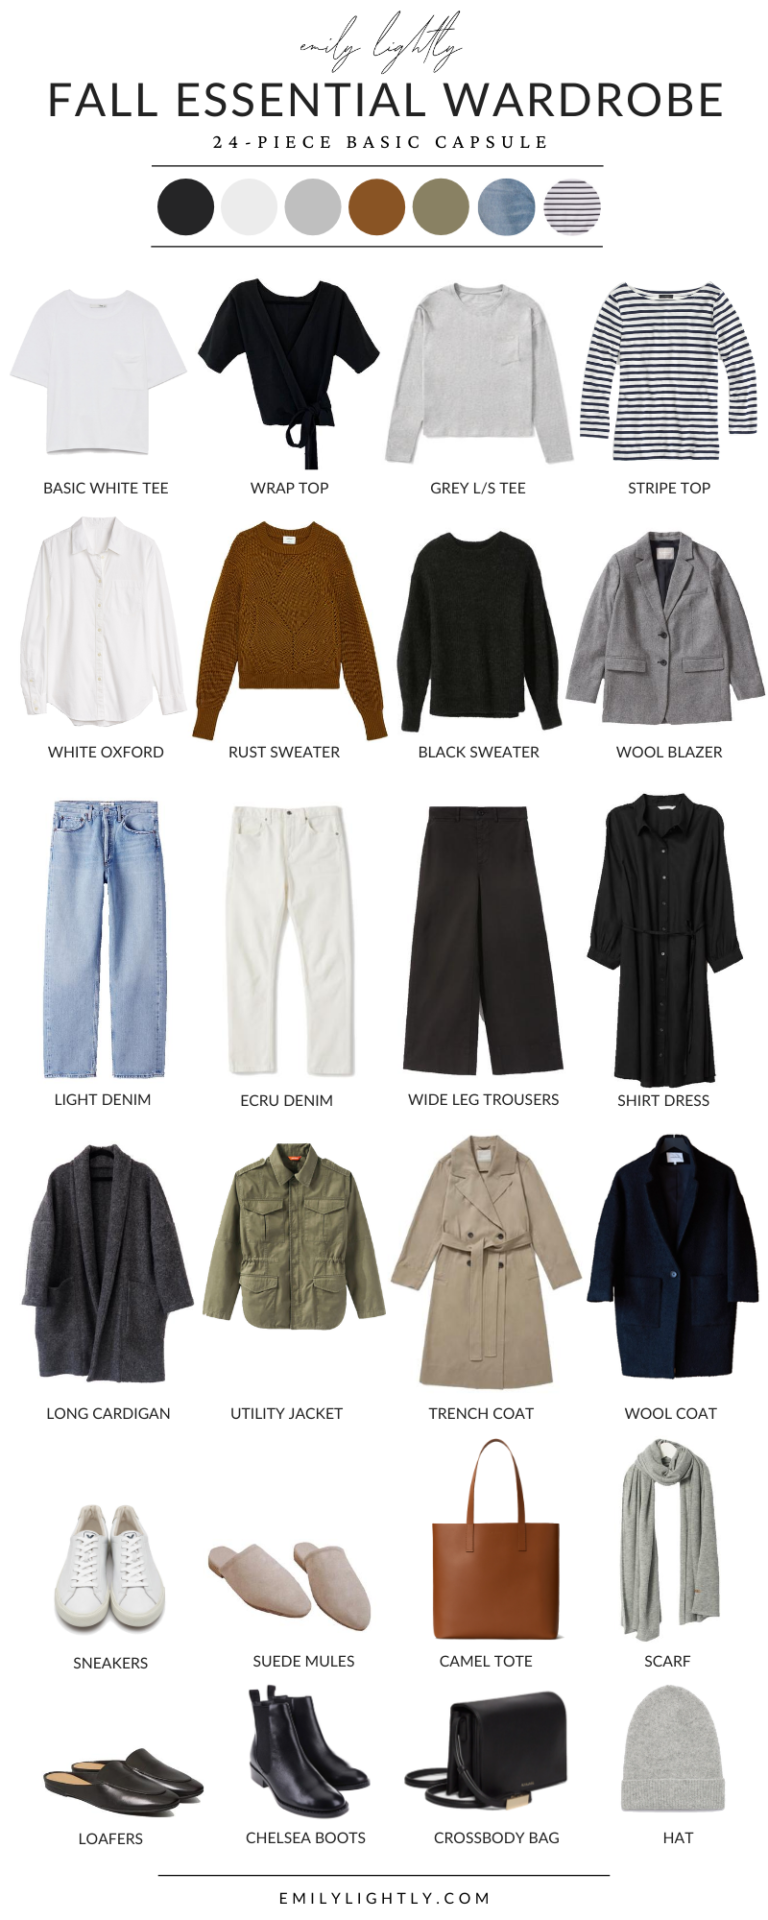 A Fall Essential Capsule Wardrobe - Emily Lightly